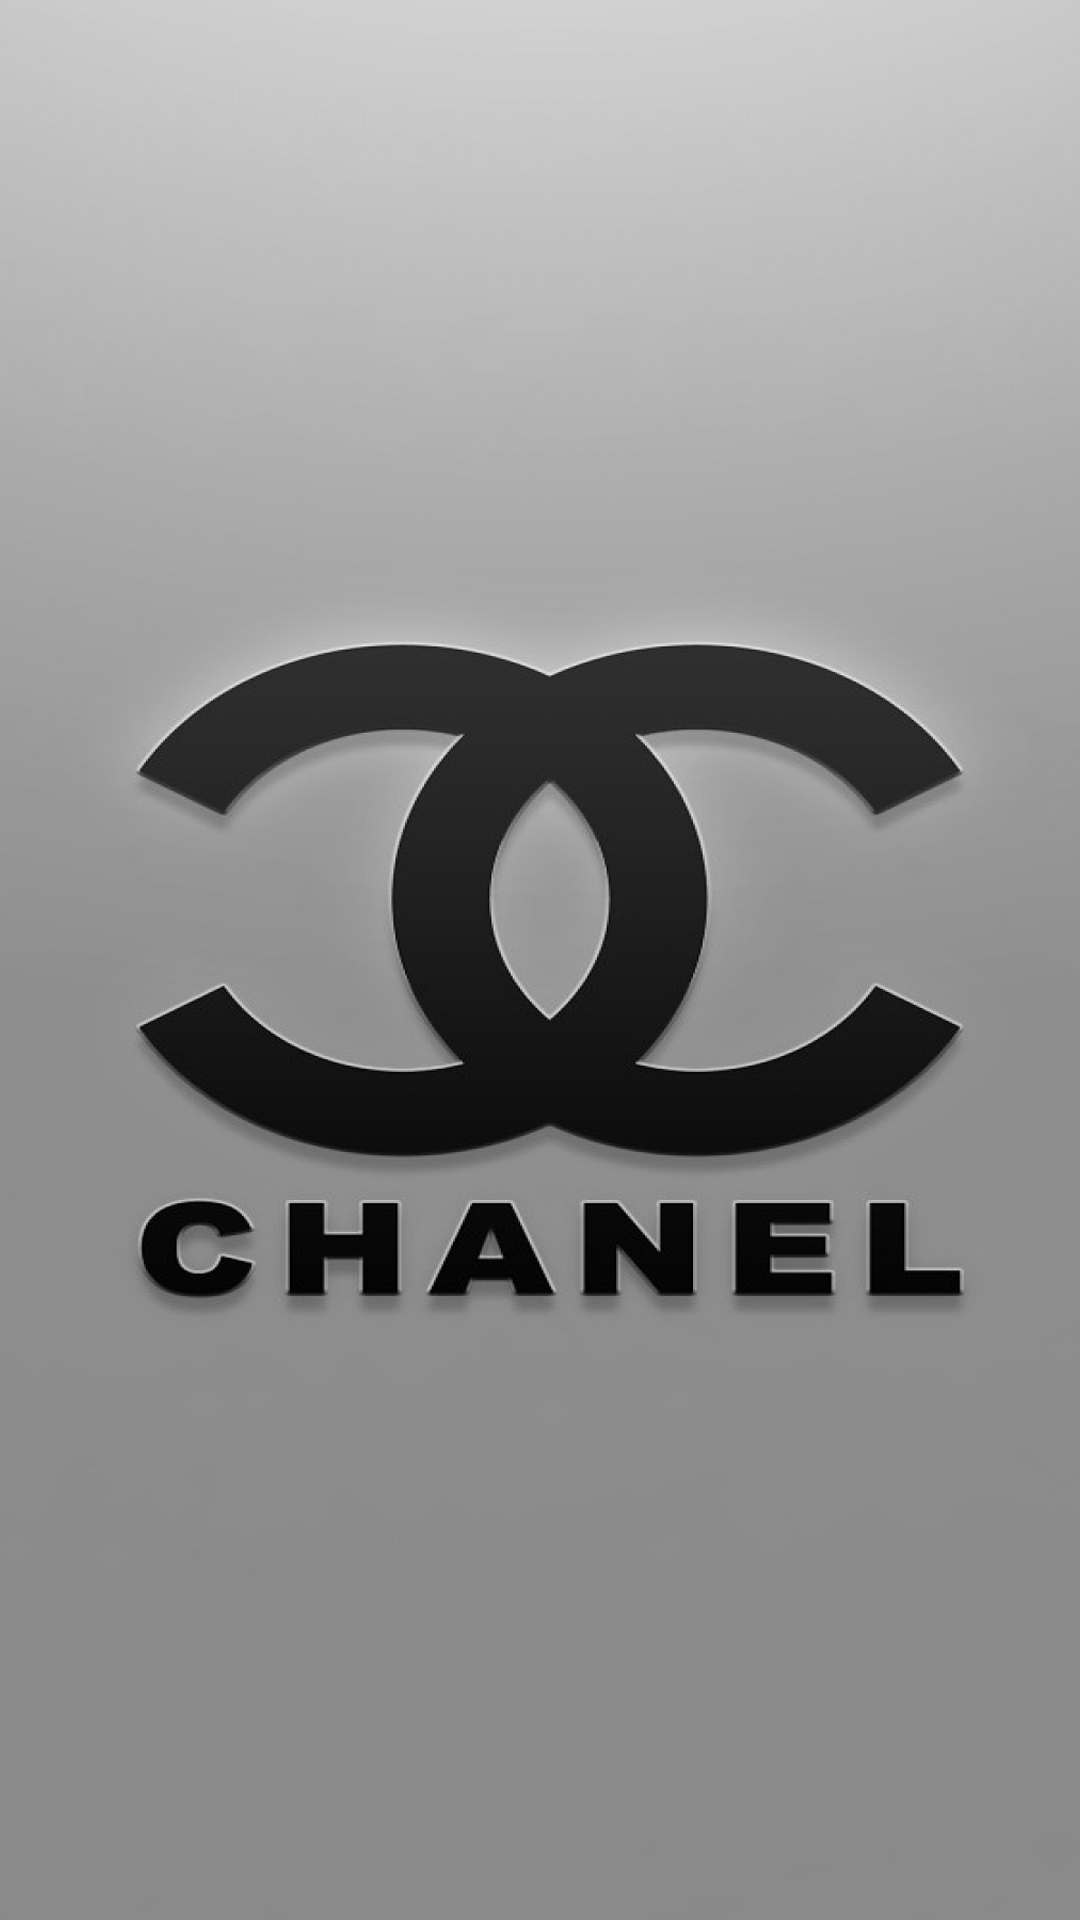 Chanel Iphone Wallpaper Hd